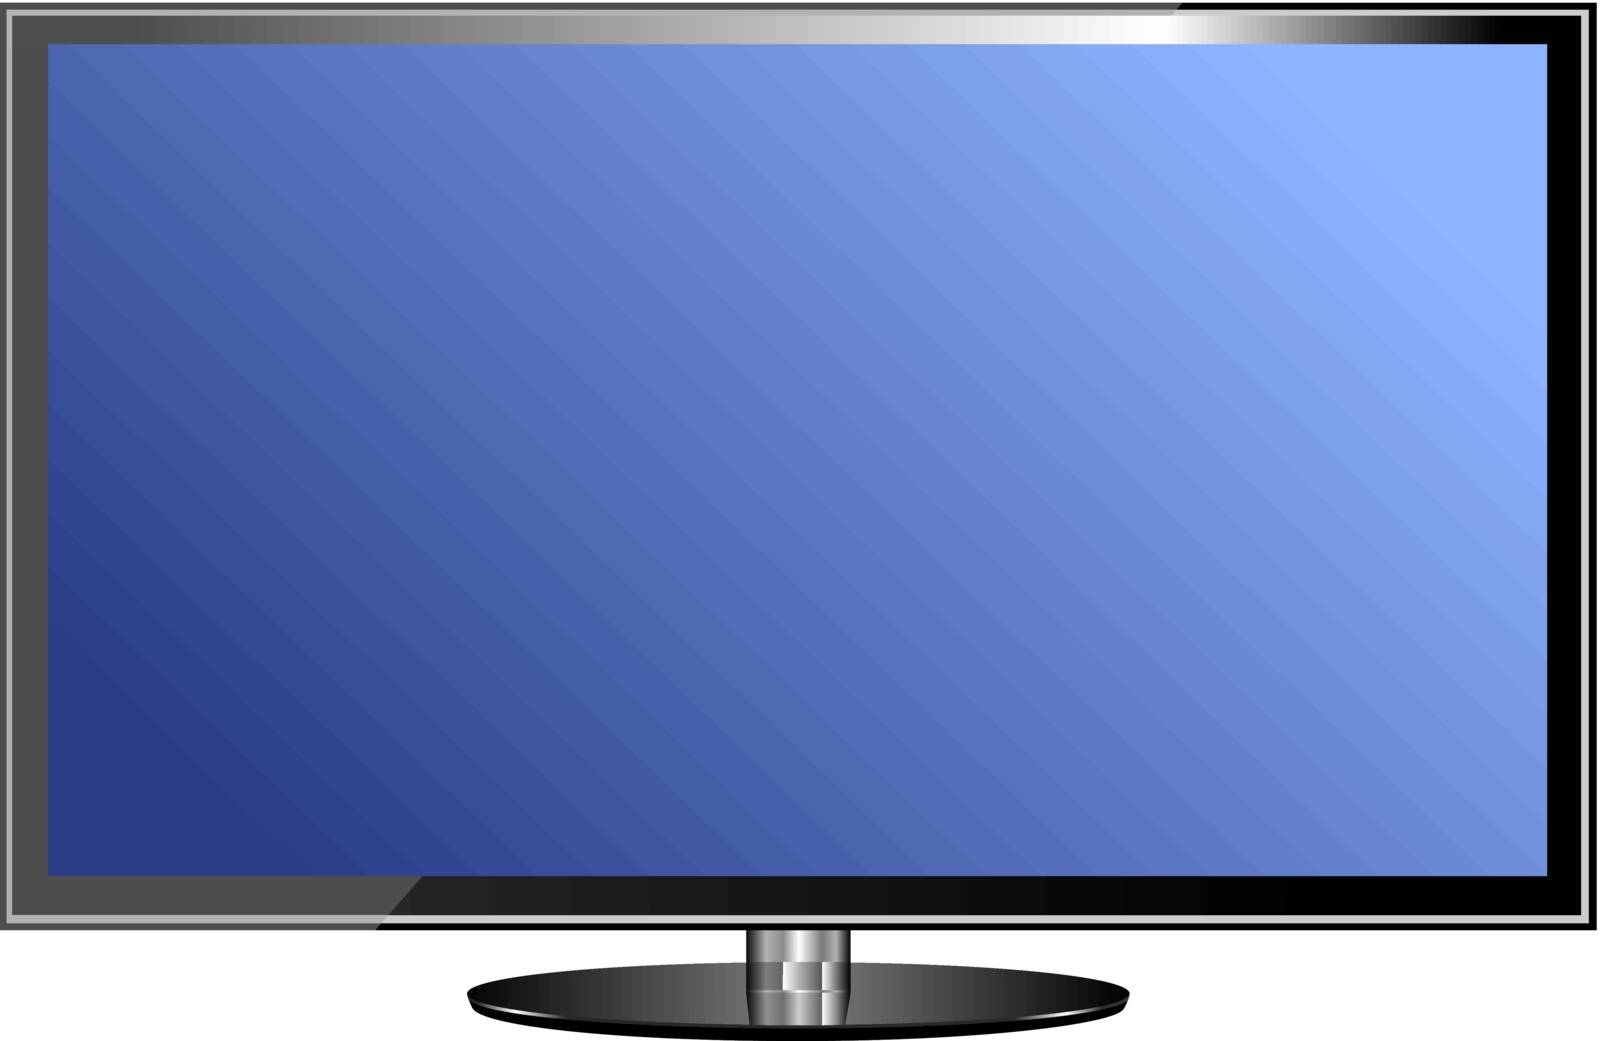 TV screen by bormash